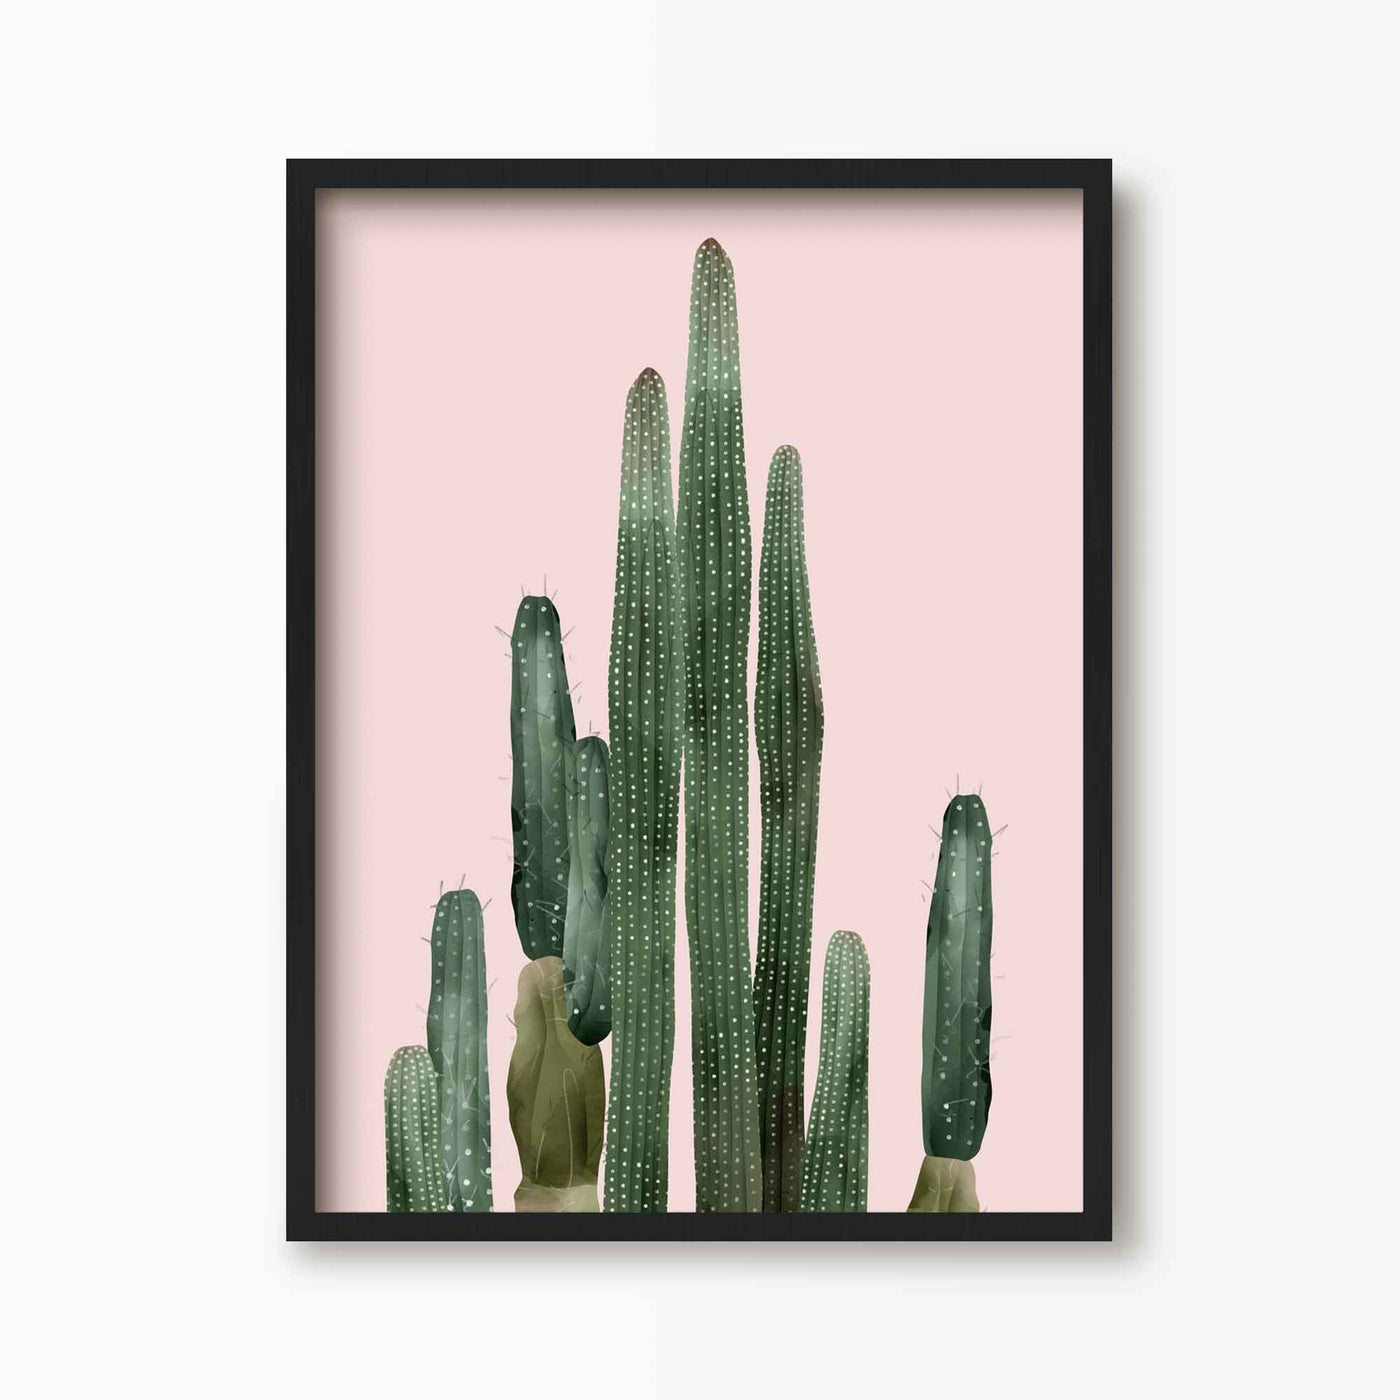 Green Lili 30x40cm (12x16") / Black Frame Pink Cactus Print